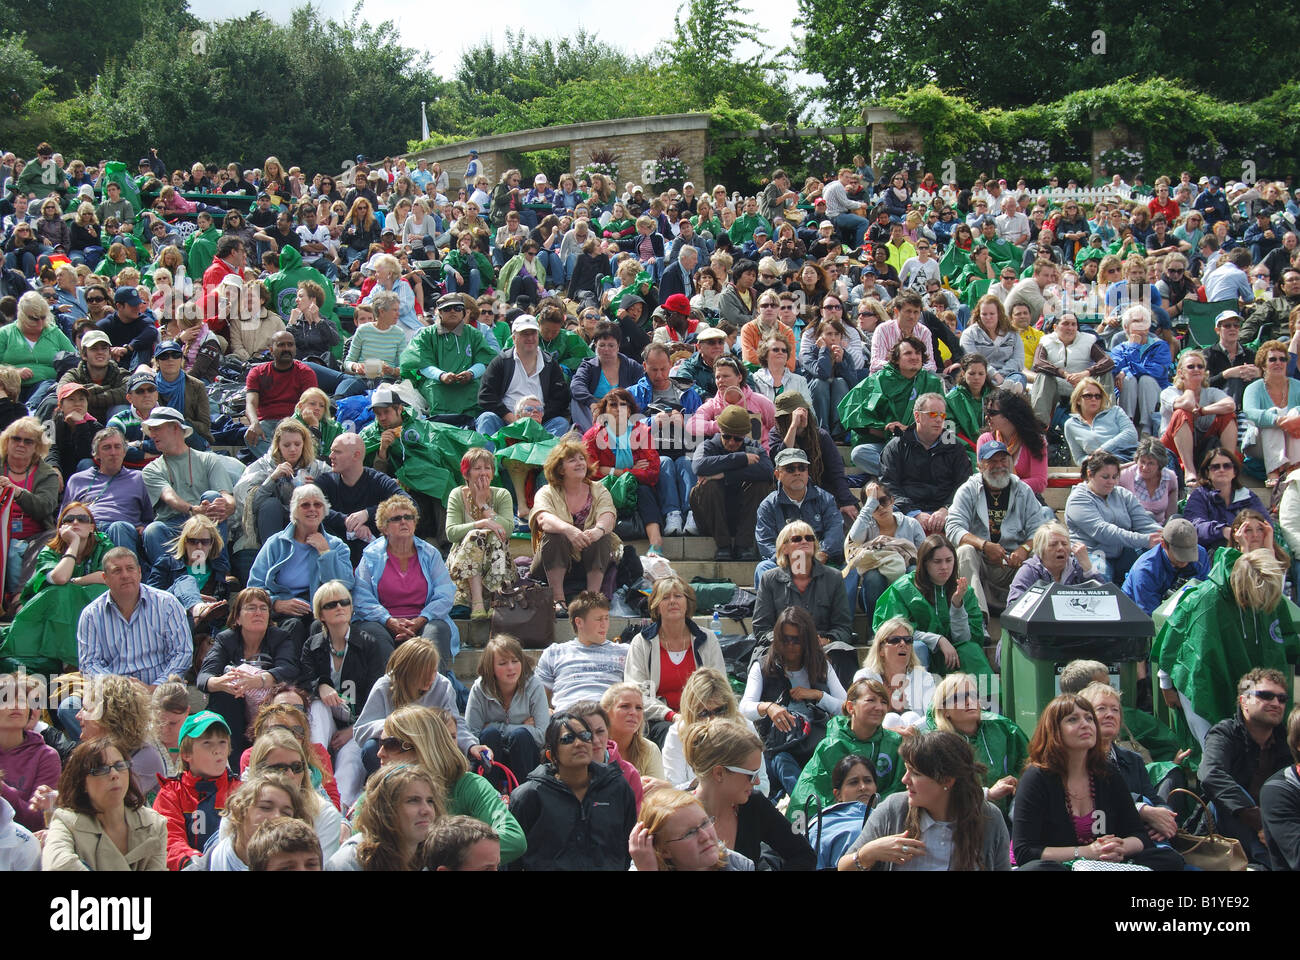 Spectators watching tennis on Henman Hill, The Championships, Wimbledon, Merton Borough, Greater London, England, United Kingdom Stock Photo